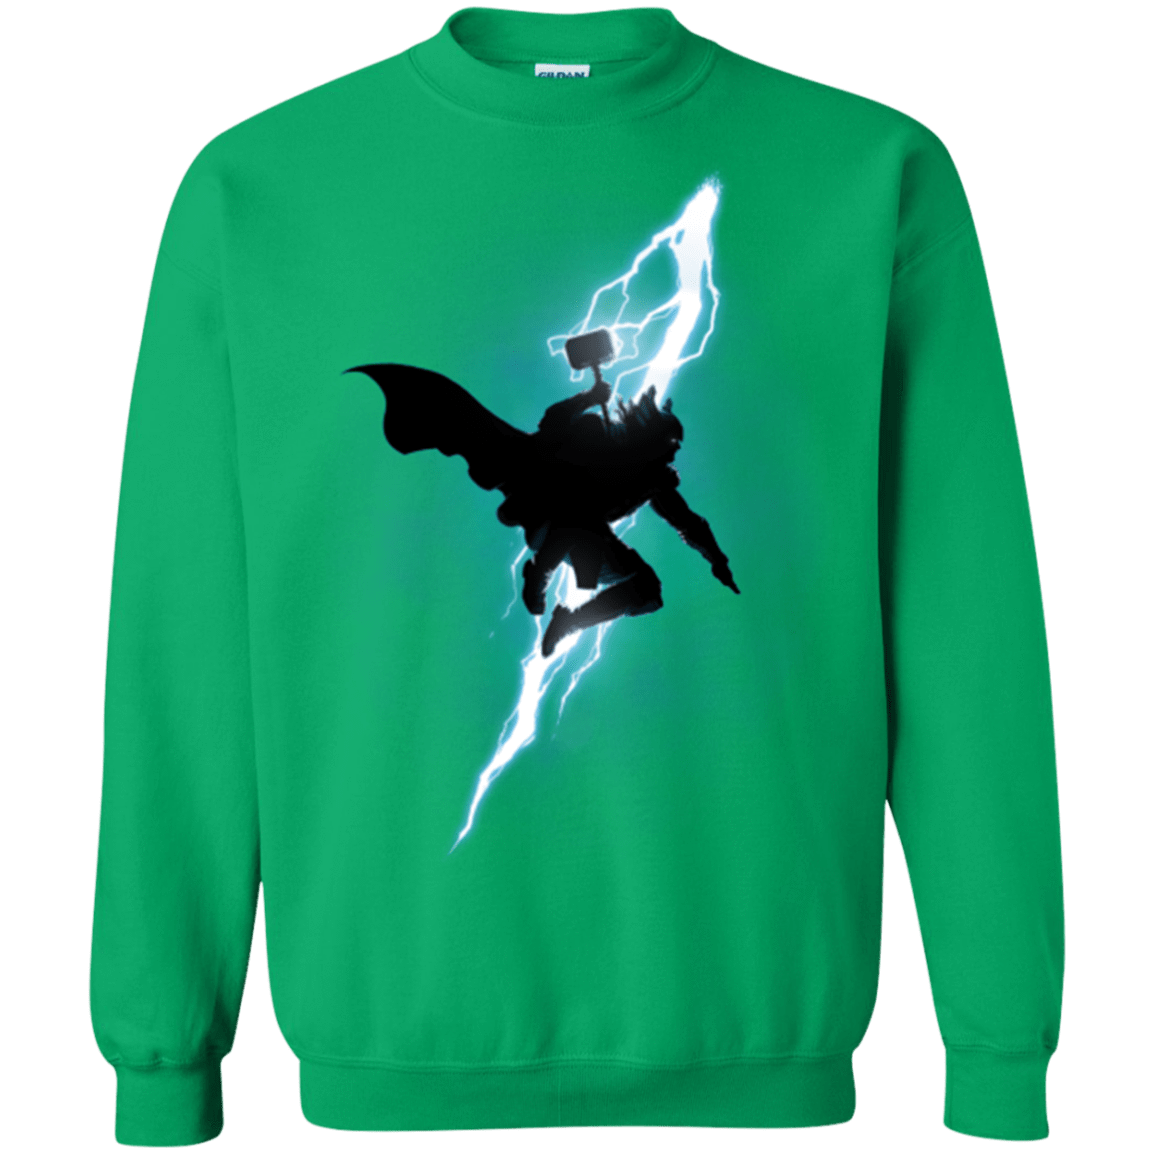 Sweatshirts Irish Green / Small The Thunder God Returns Crewneck Sweatshirt